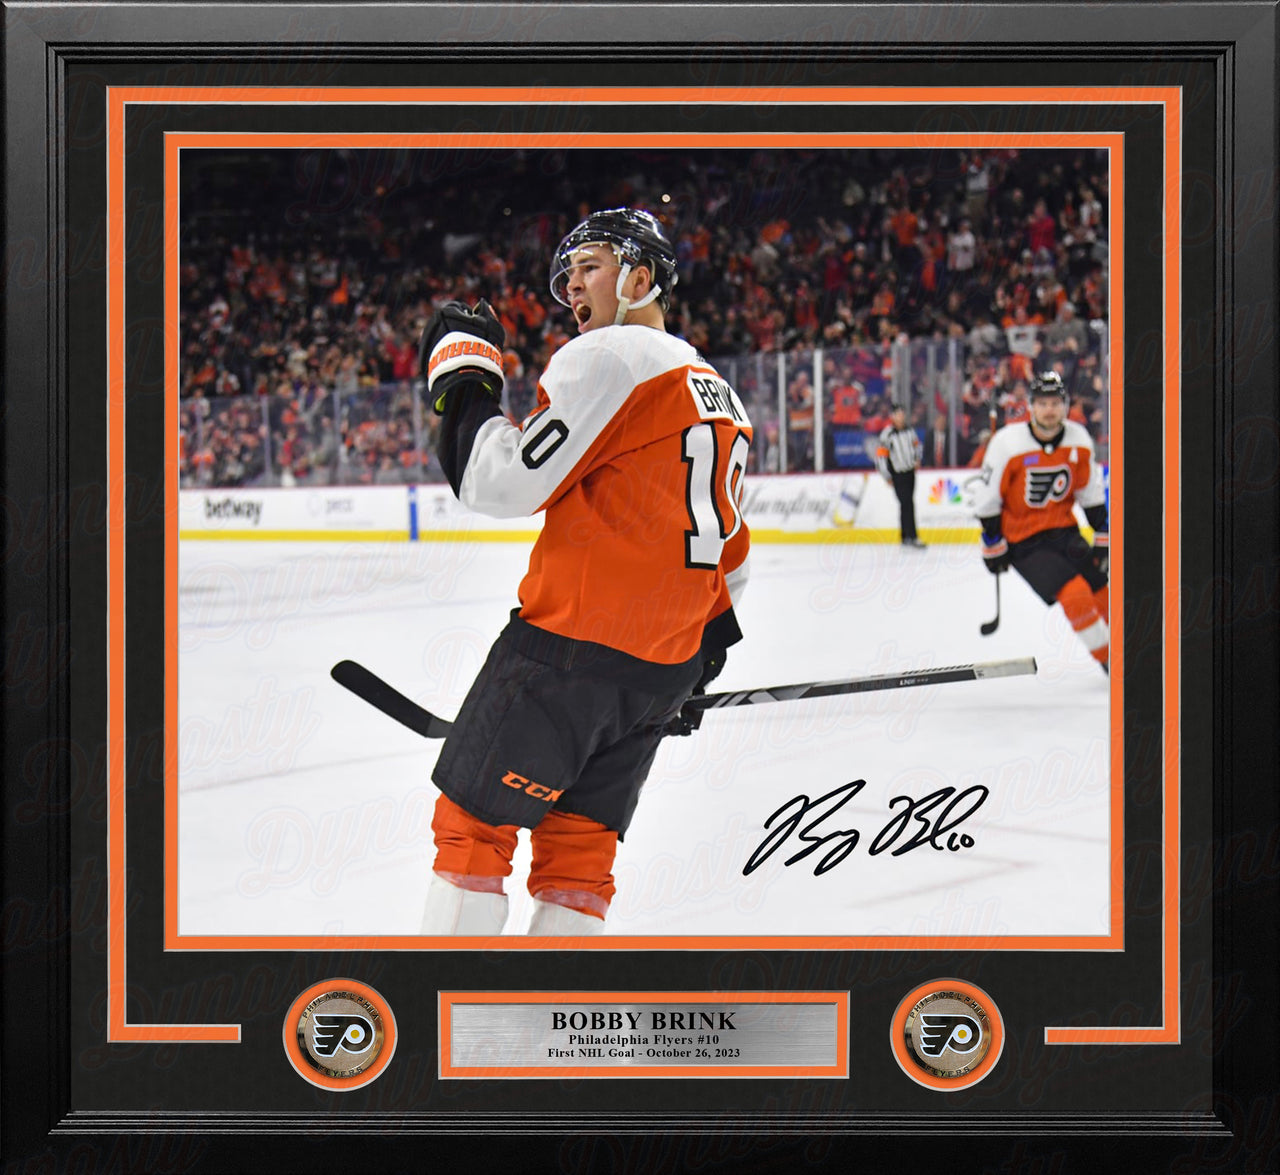 Bobby Brink Fist Pump Autographed Philadelphia Flyers 16" x 20" Framed Hockey Photo